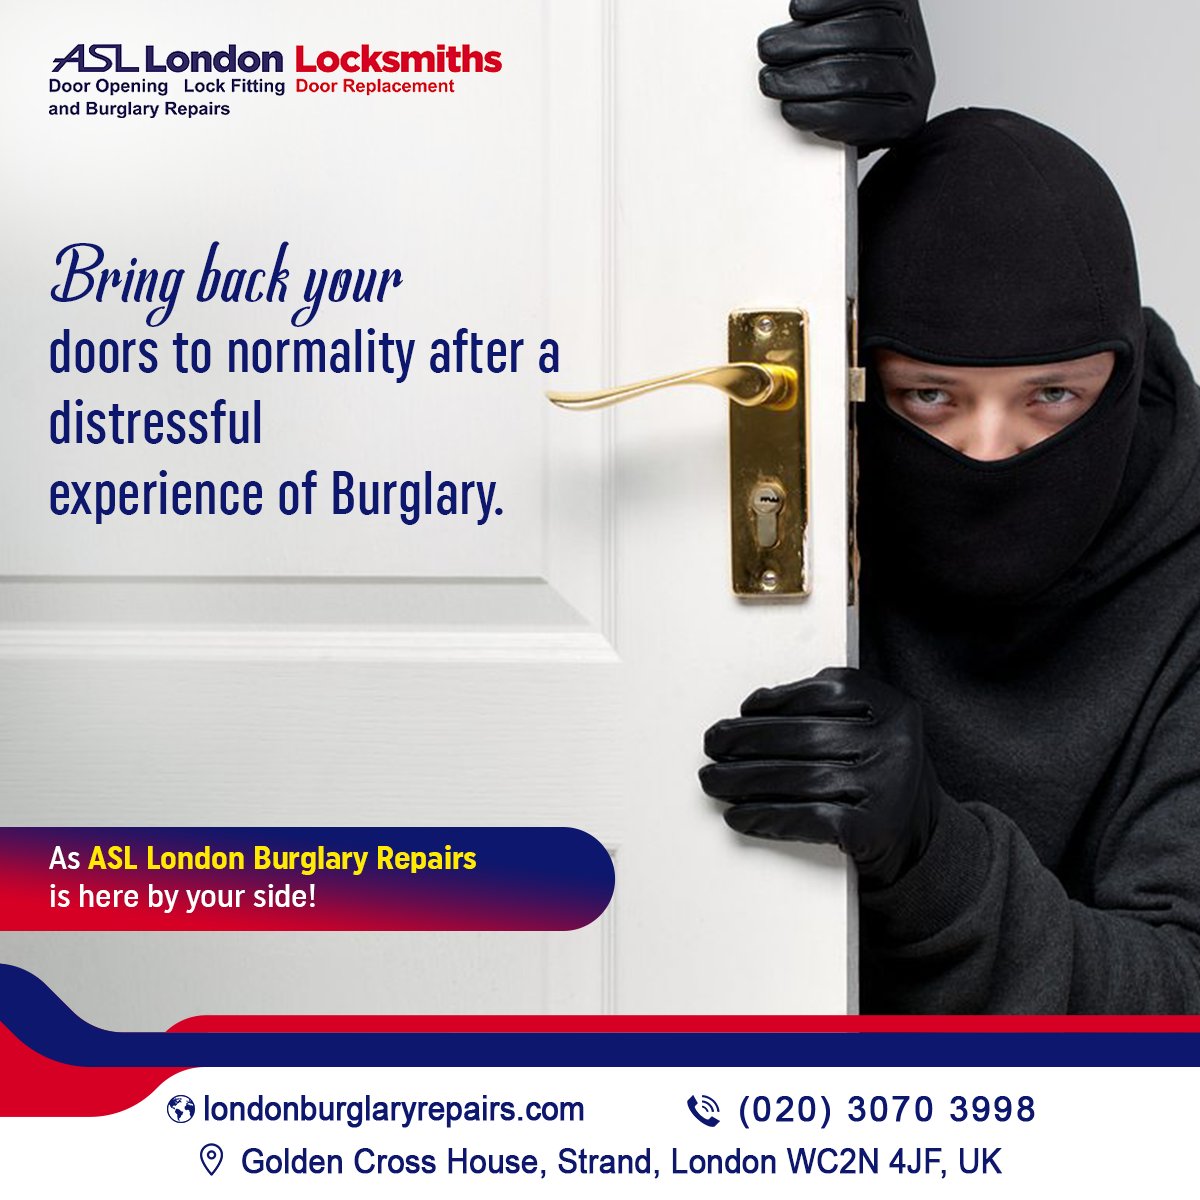 Experiencing the aftermath of a burglary can be distressing. 
Let ASL London Burglary Repairs assist you in restoring your home's security and peace of mind. 

#ASL #ASLLondonBurglaryRepair #EmergencyDoorRepair #SmartLocks #SecurityUpgrade #BurglaryDoorReplacement